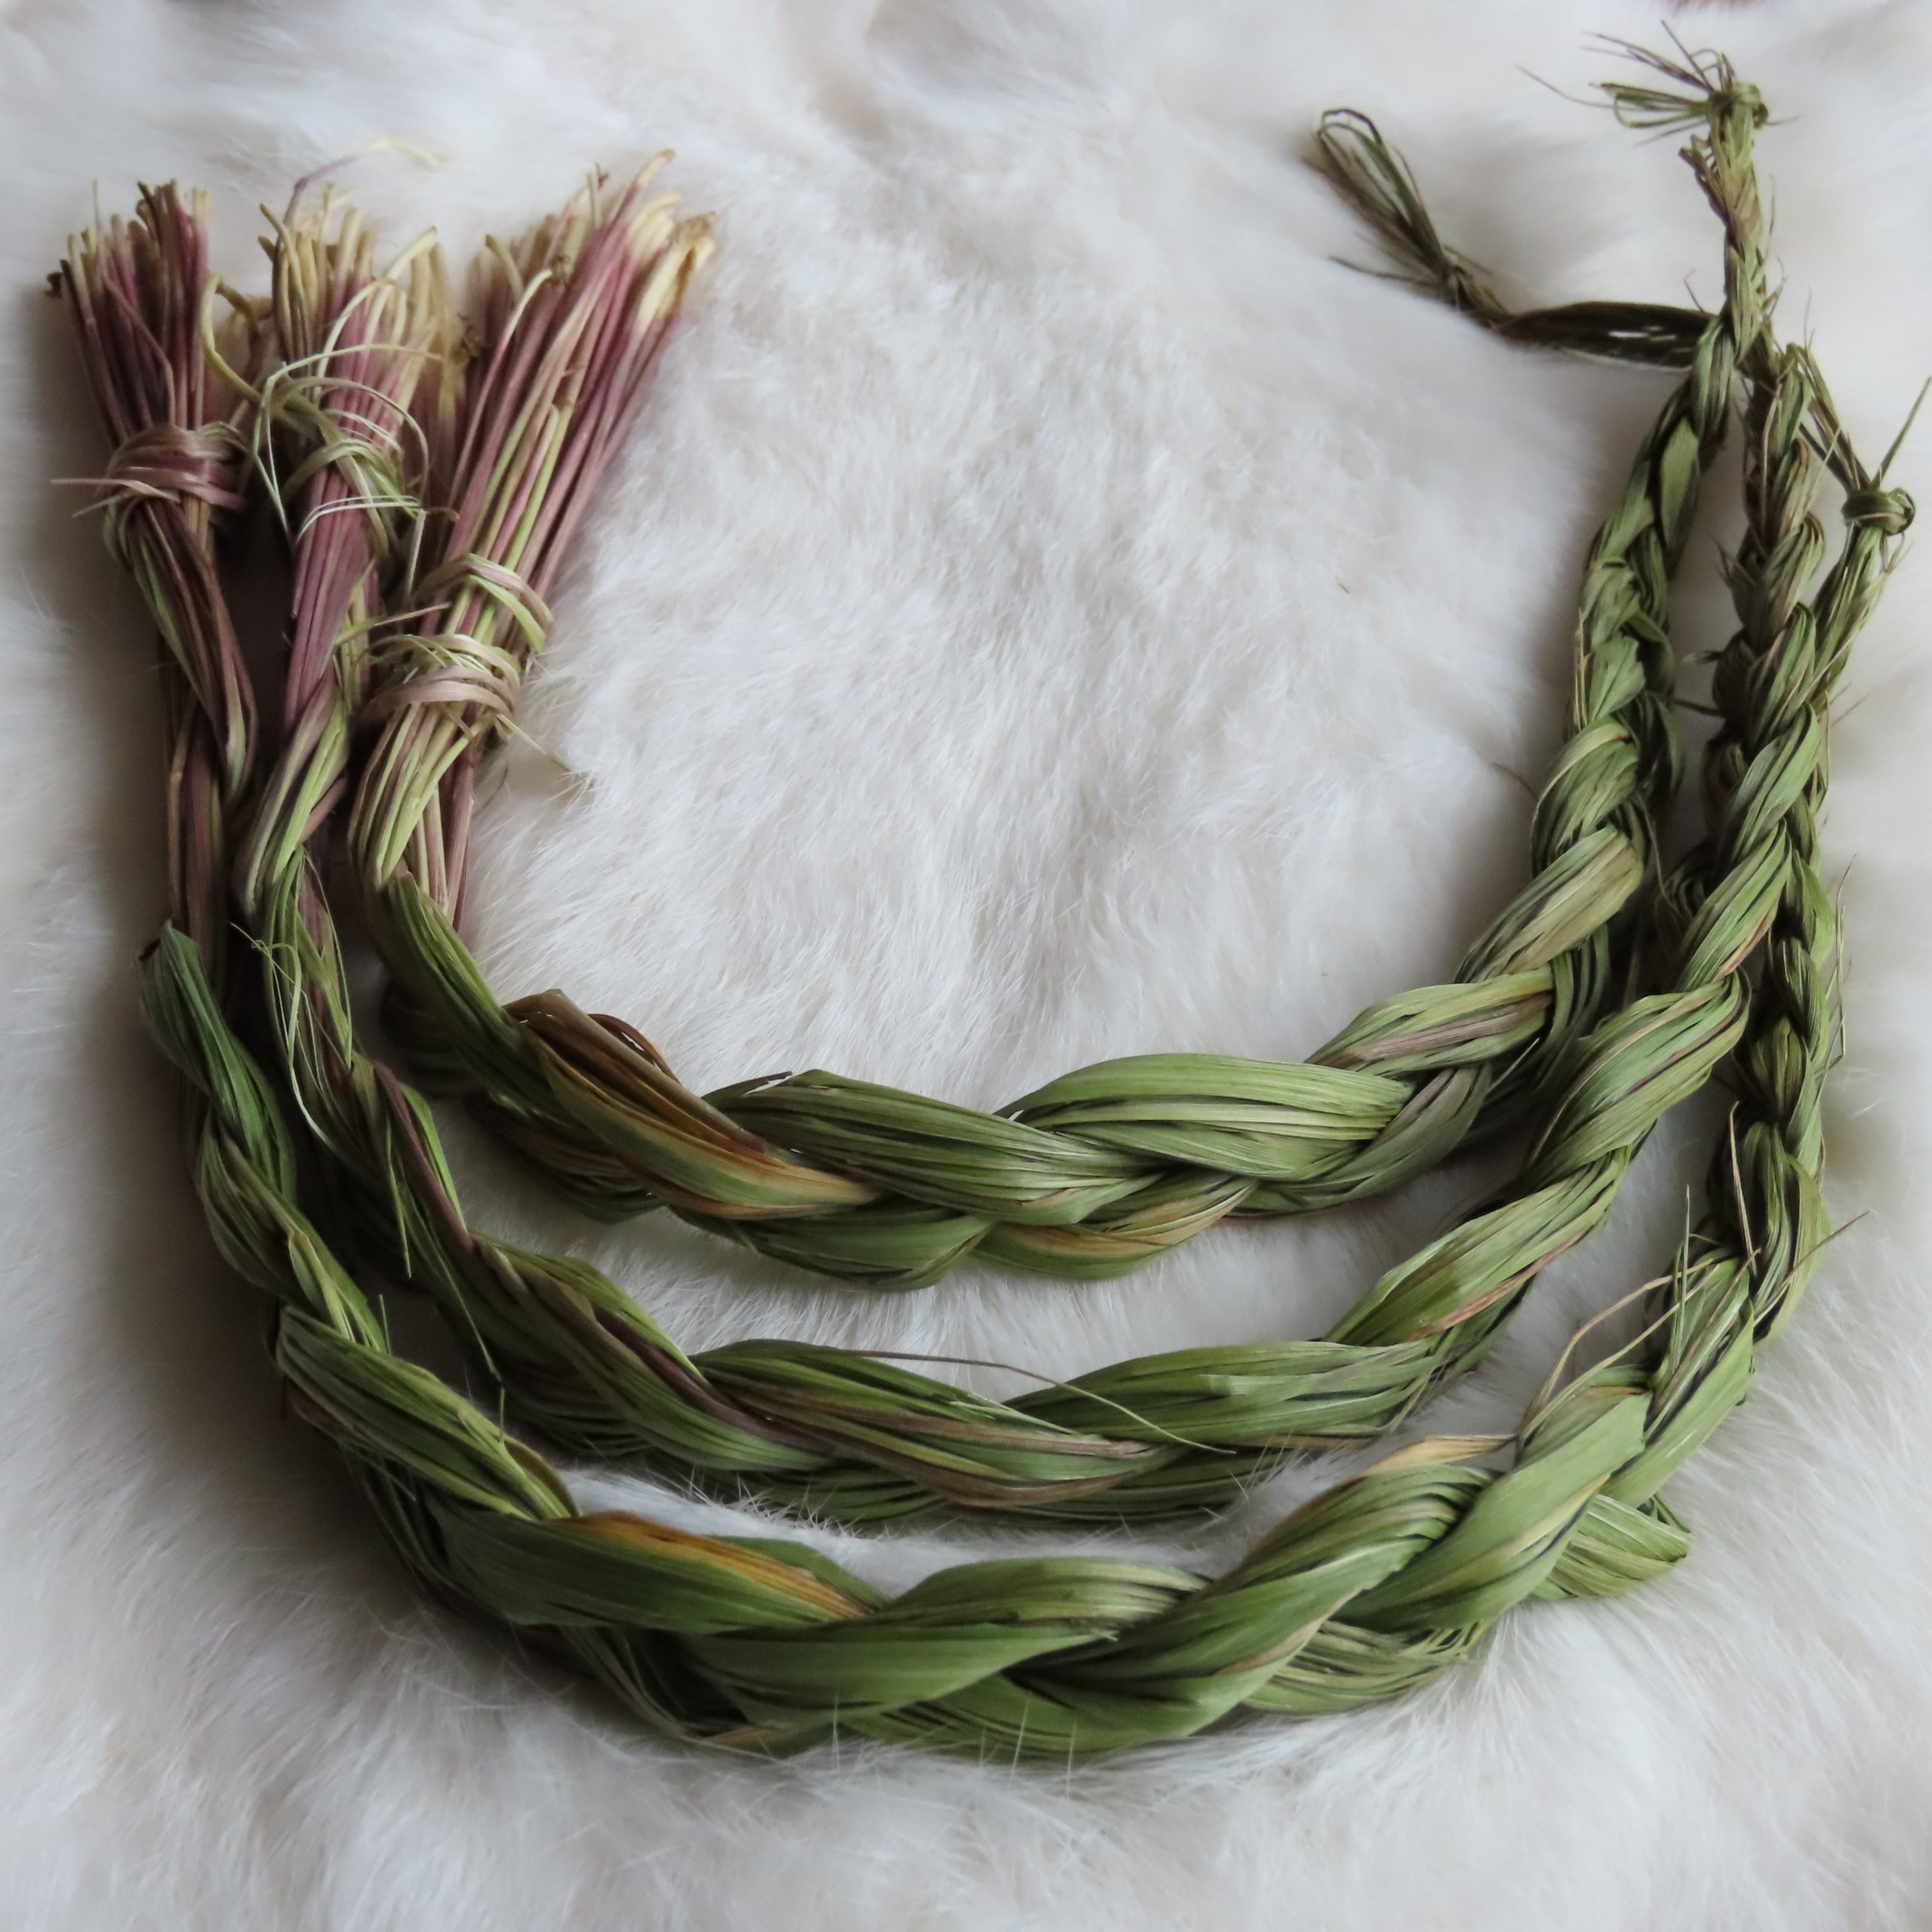 Sweetgrass braids/zoetgras strengen voor smudging/reinigen